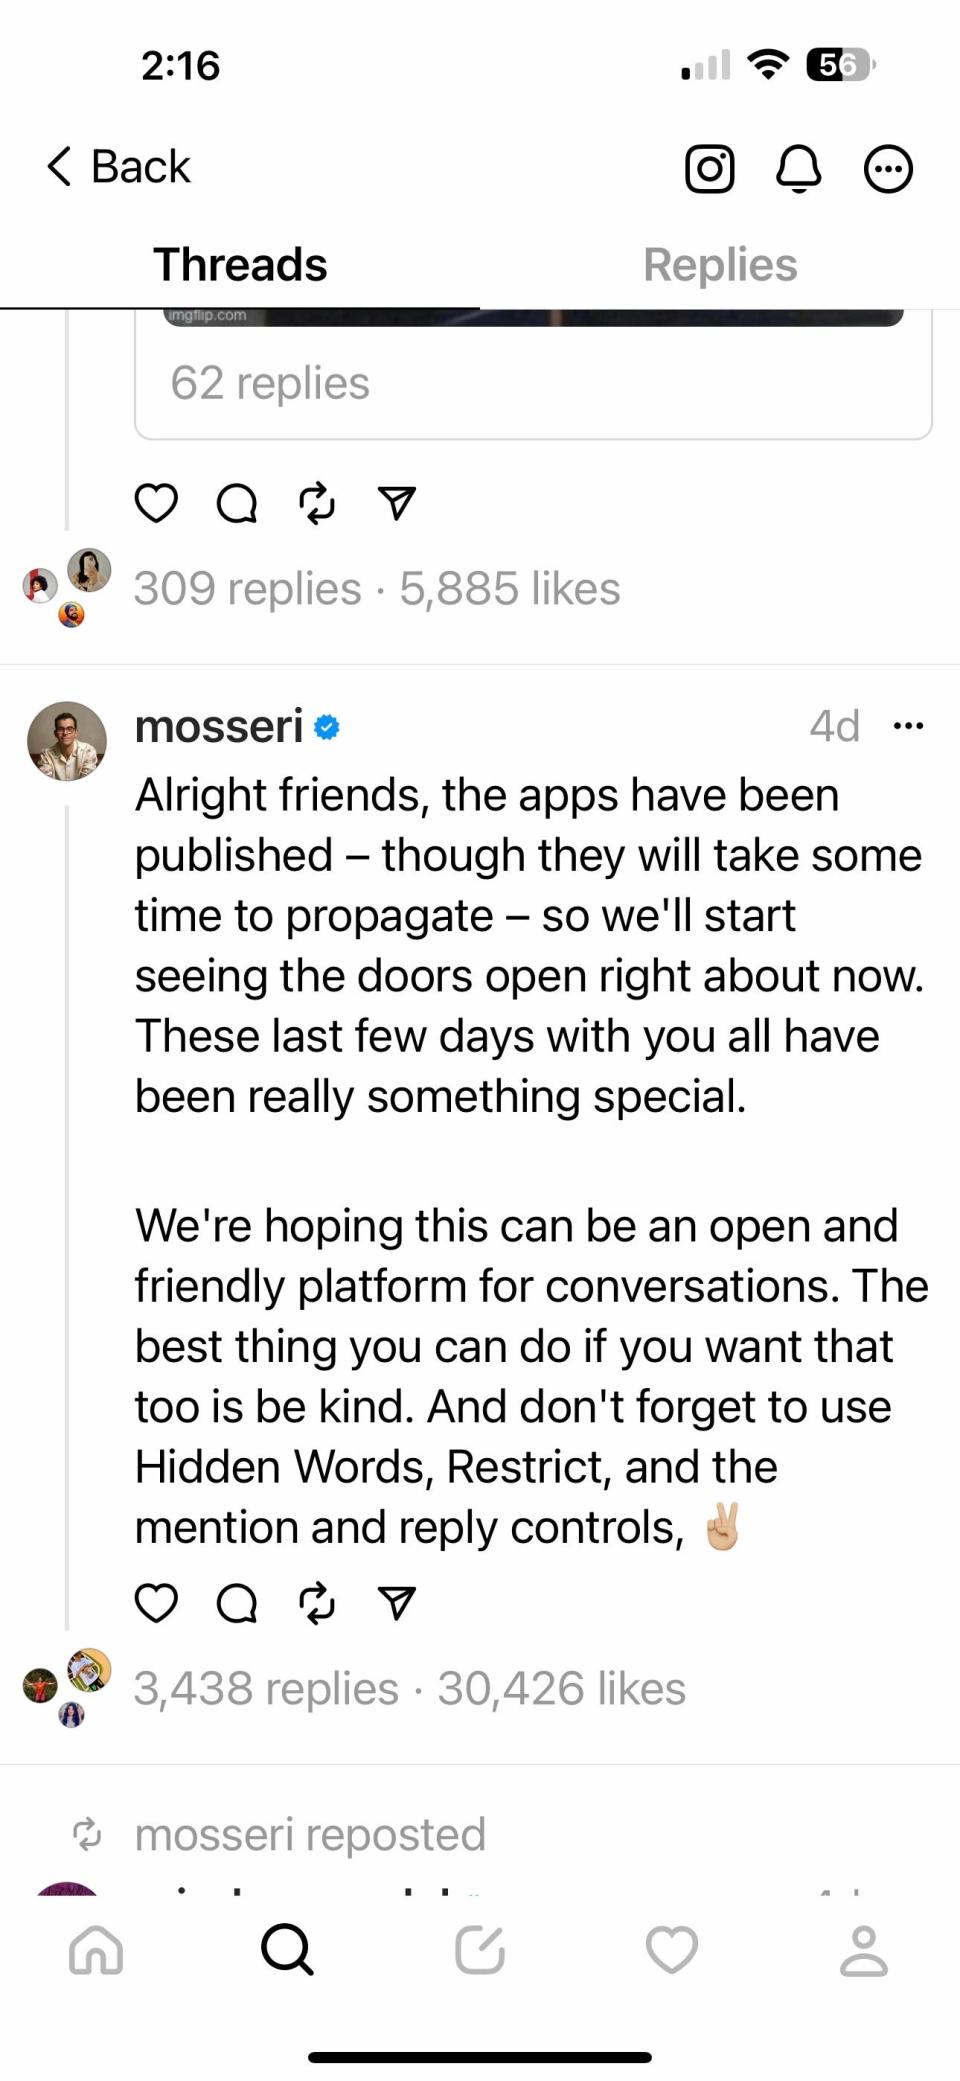 Instagram CEO Adam Mosseri on his Threads account.